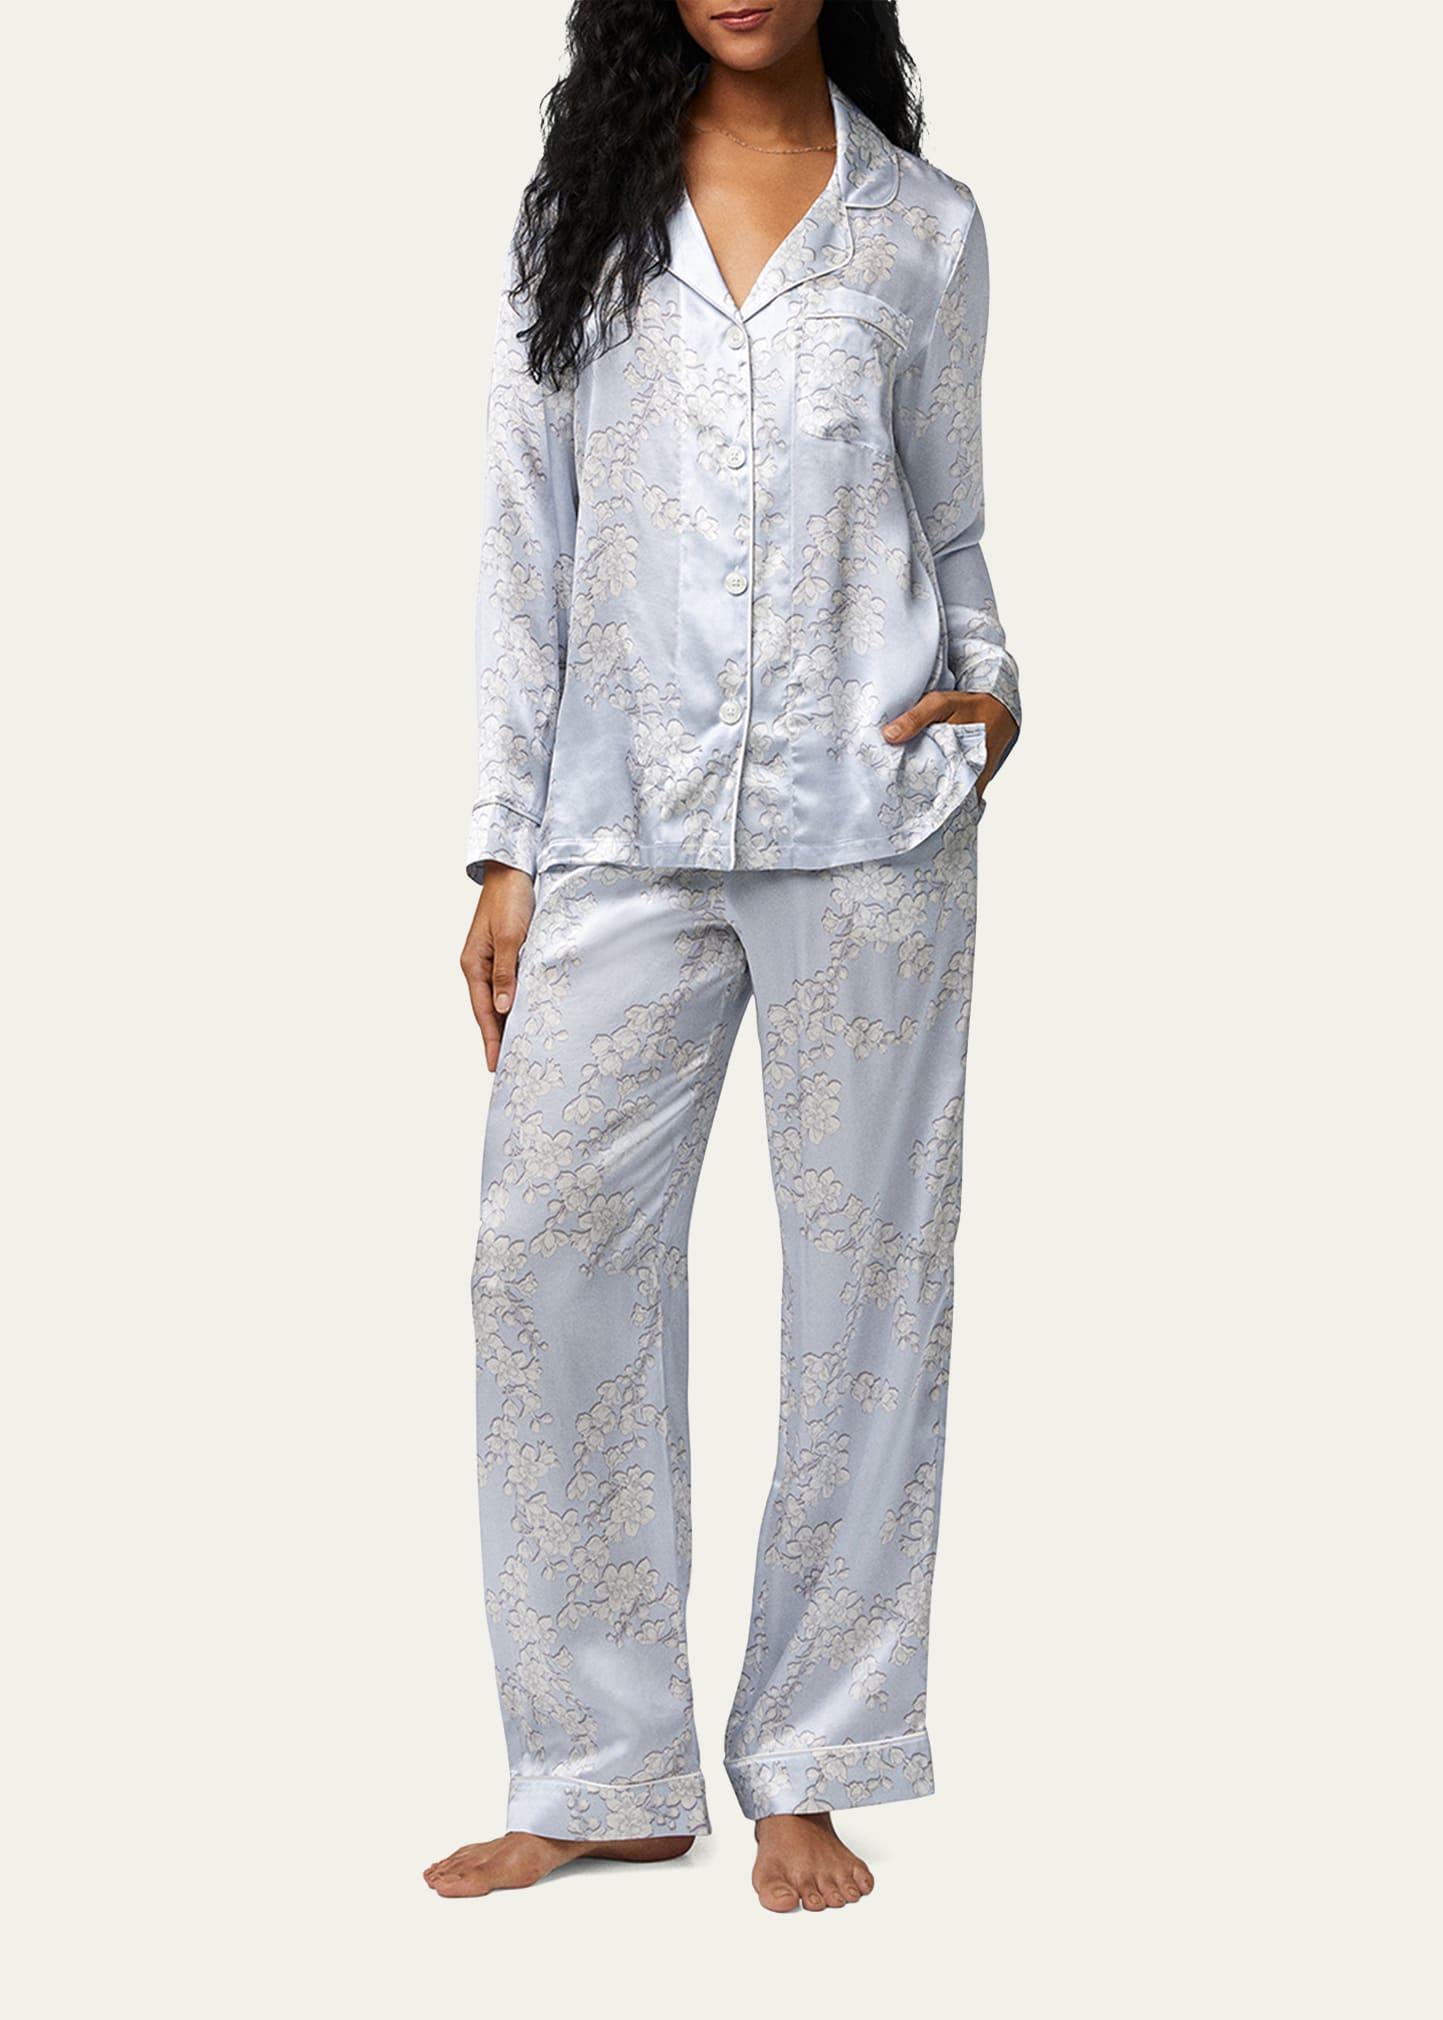 Floral-Print Silk Pajama Set